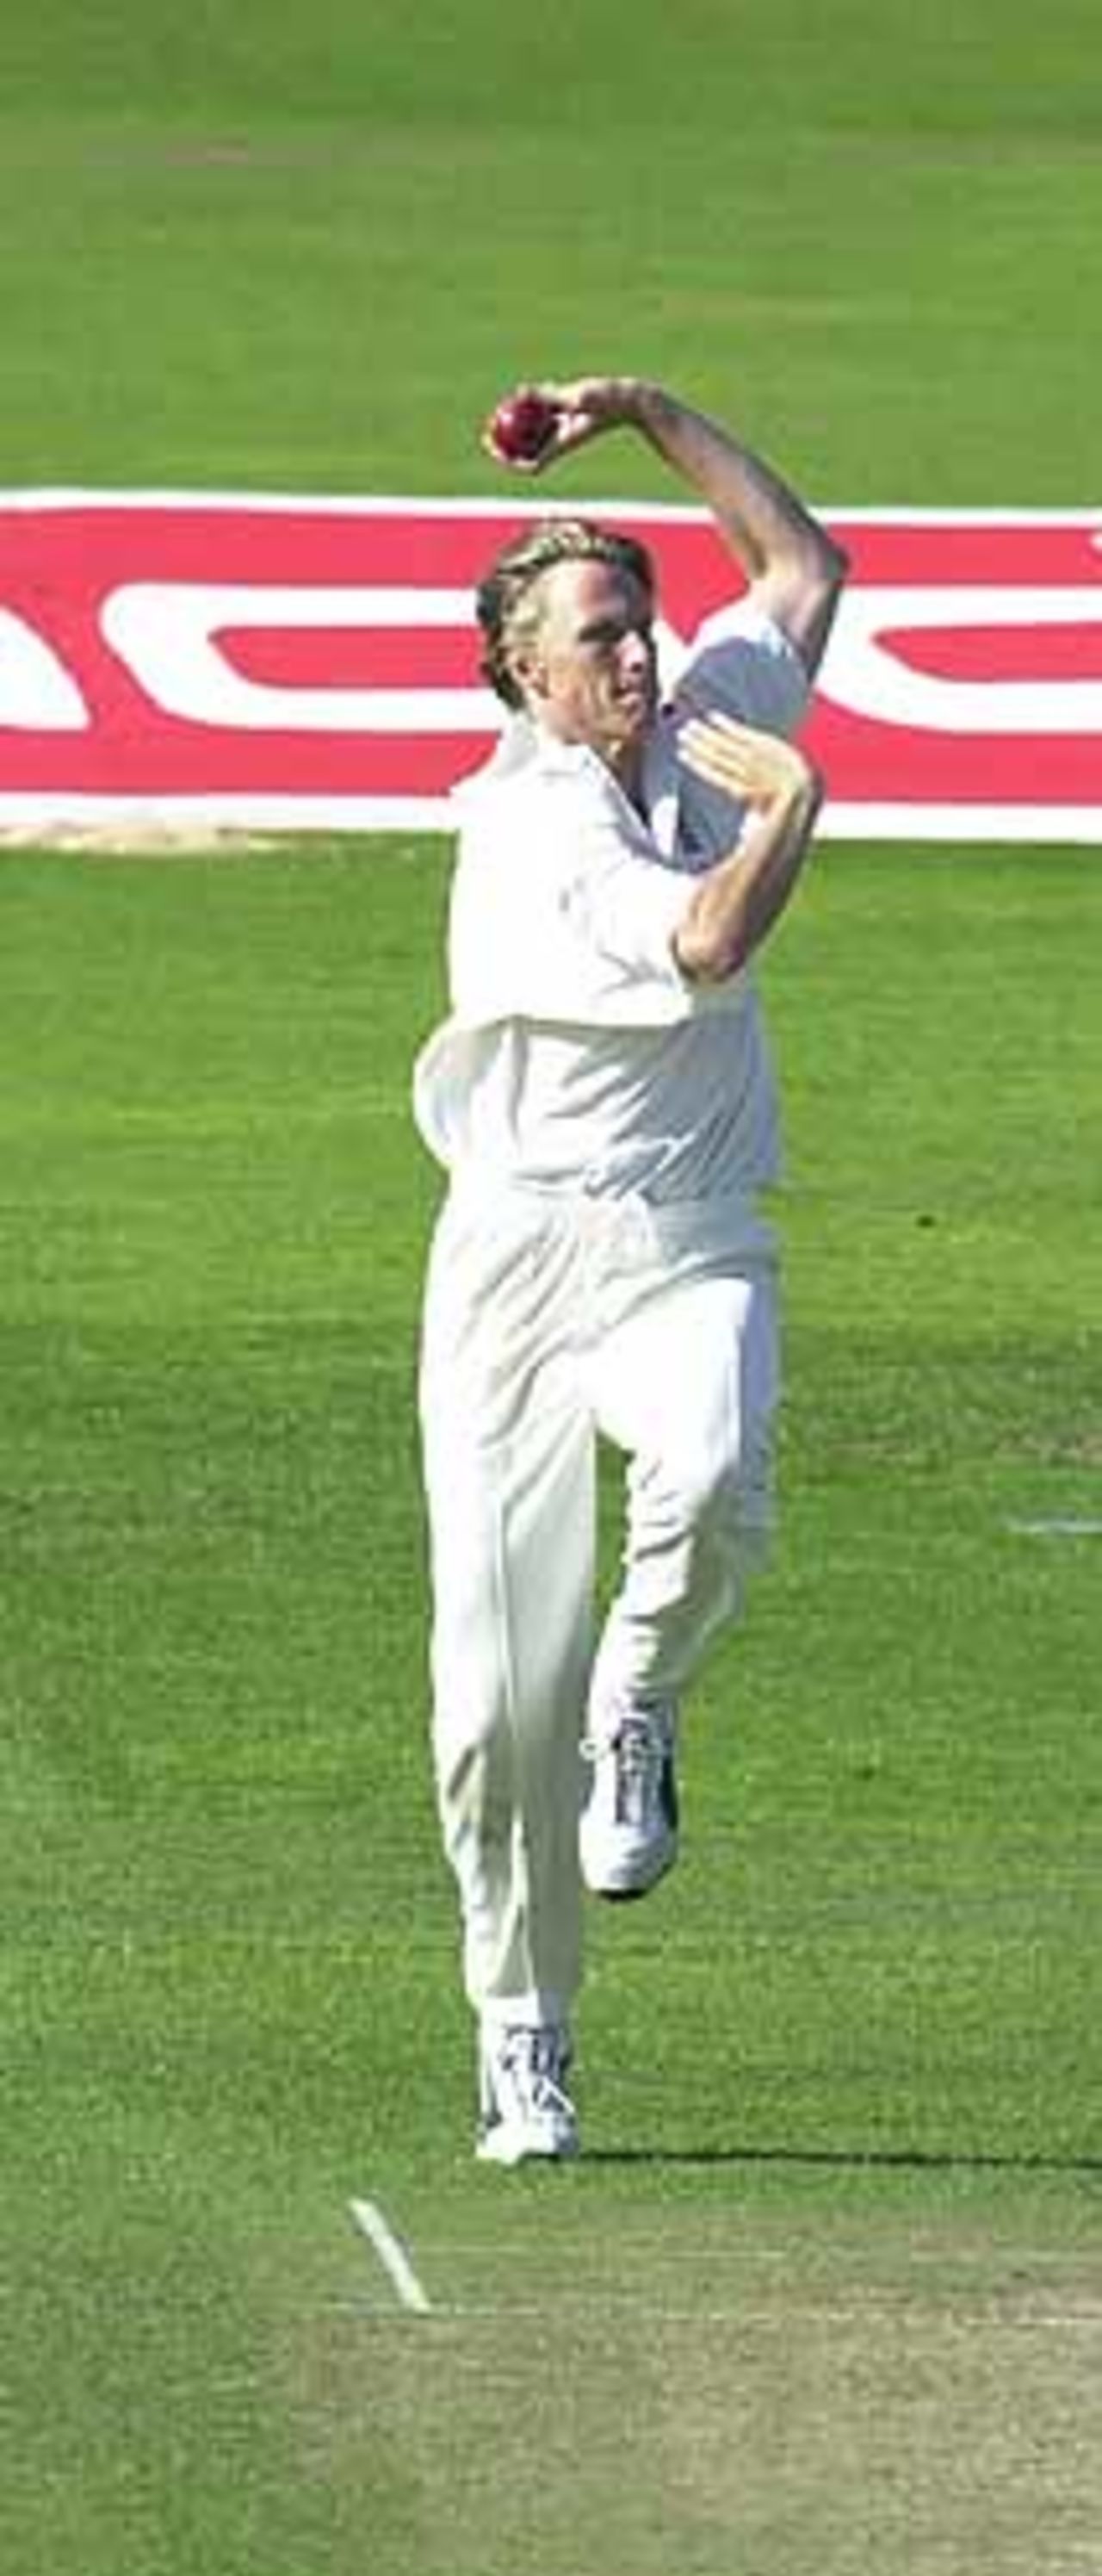 England v Australia, 4th npower Ashes Test, Leeds, 16-20 August 2001